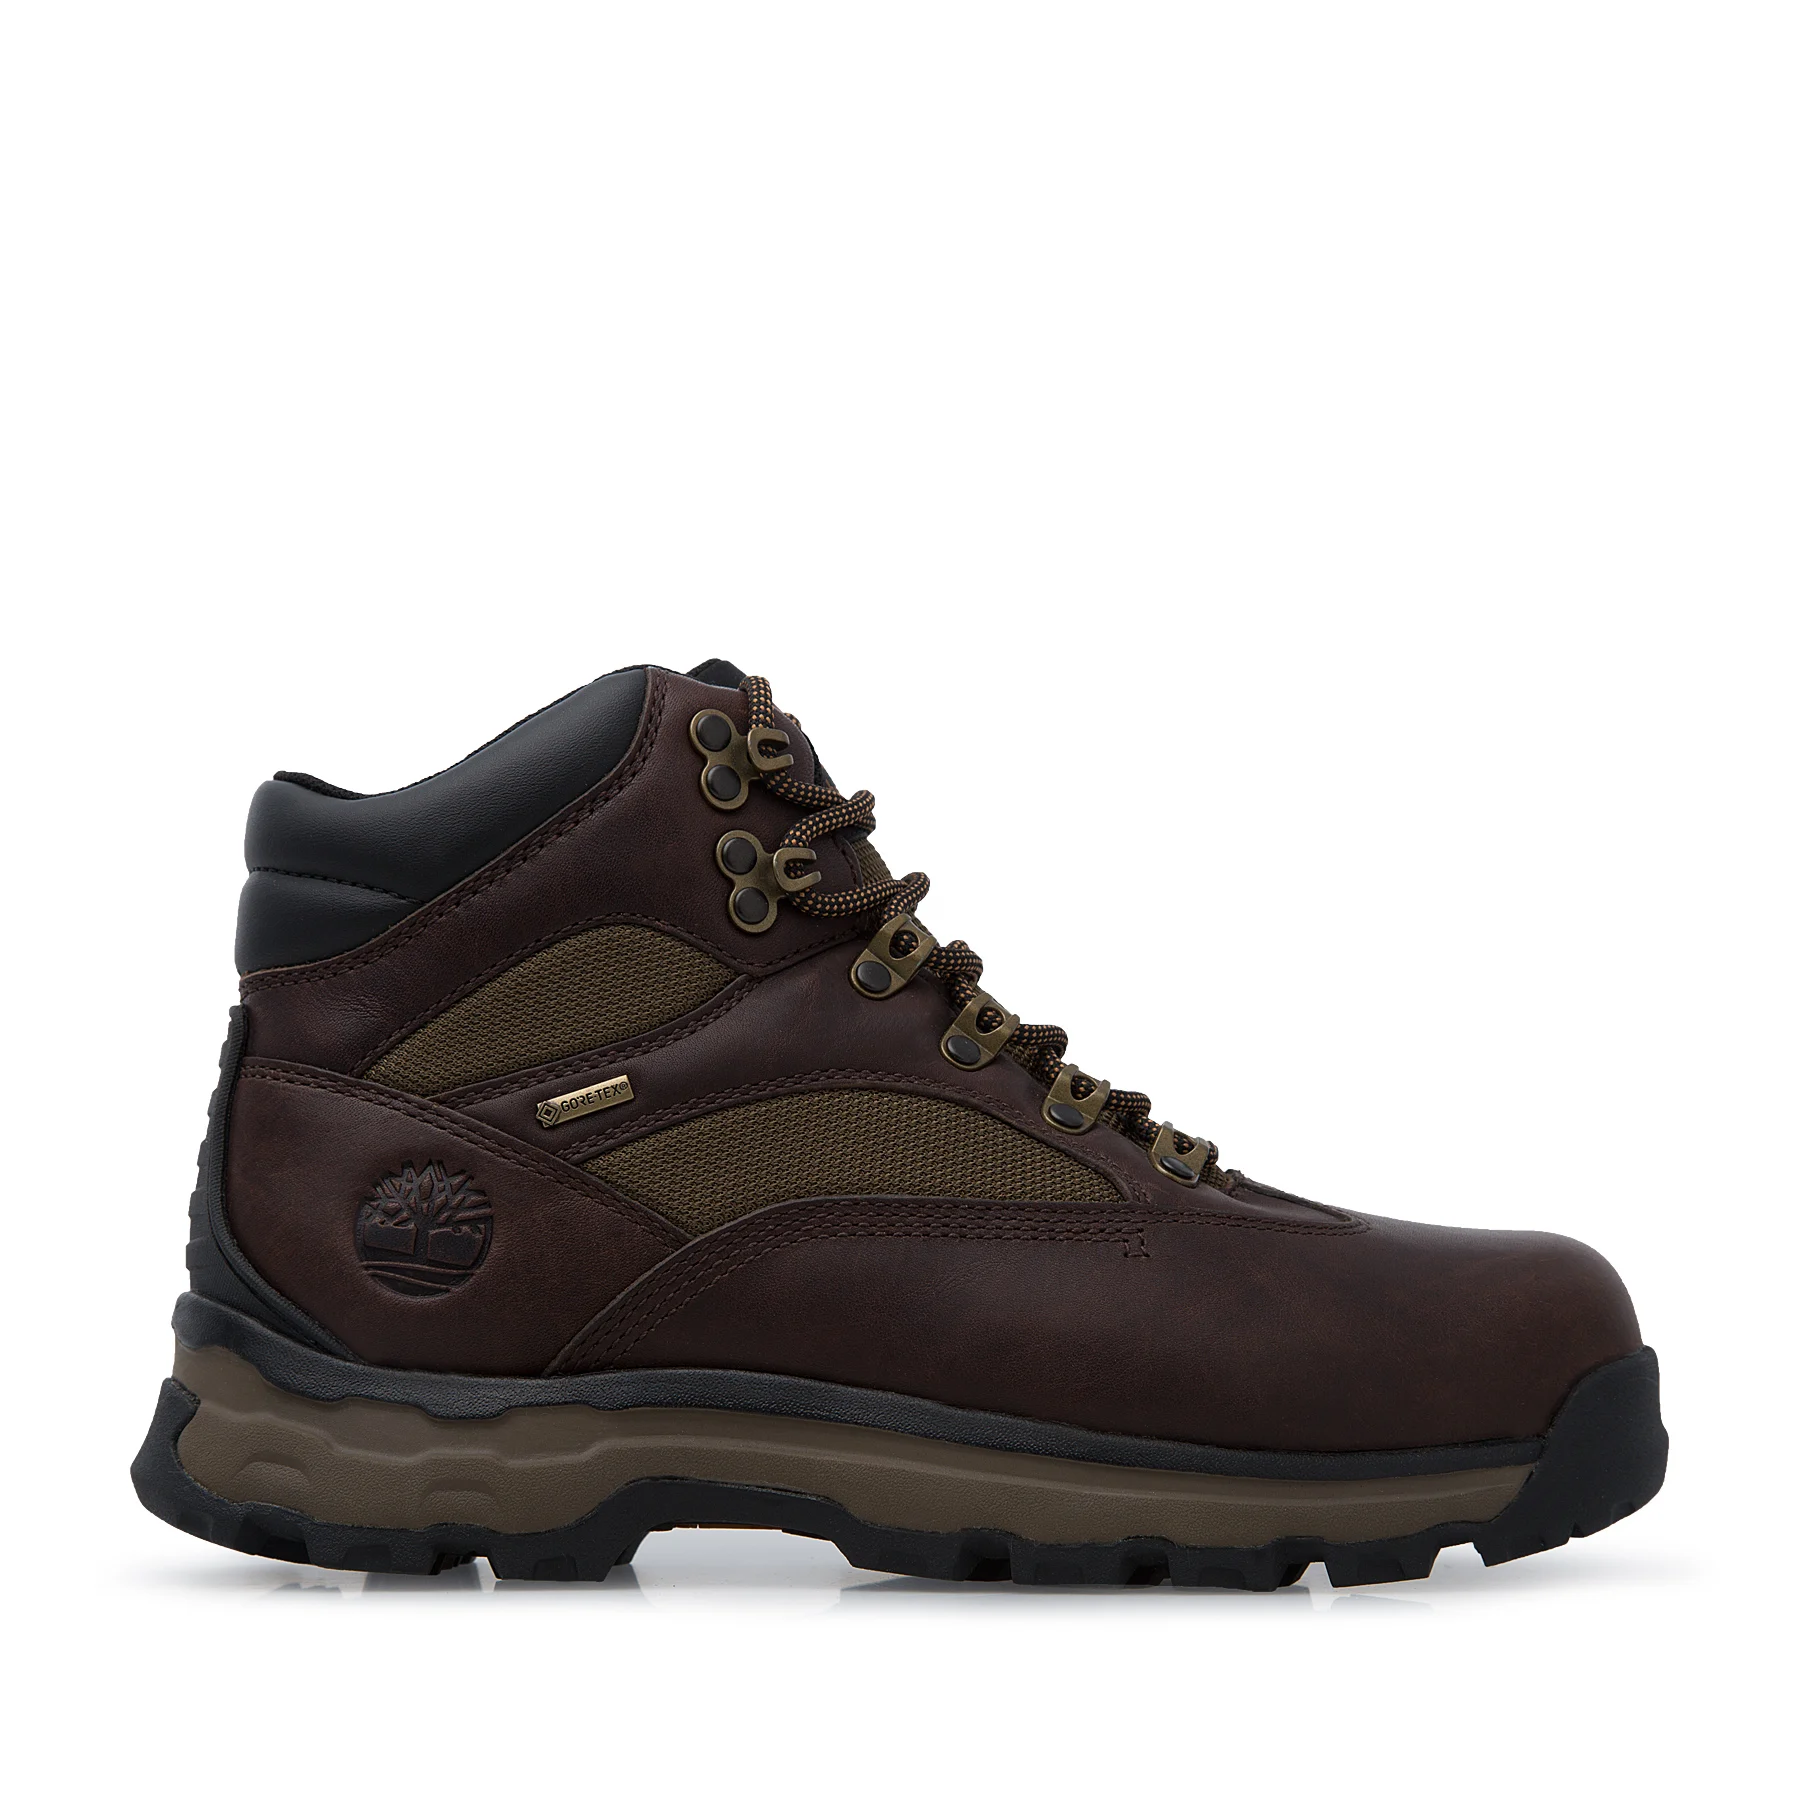 Elaborar solitario Extra Timberland Chocorua Waterproof Boots Men Boots Tb0 A1hkq A661 - Men's Boots  - AliExpress